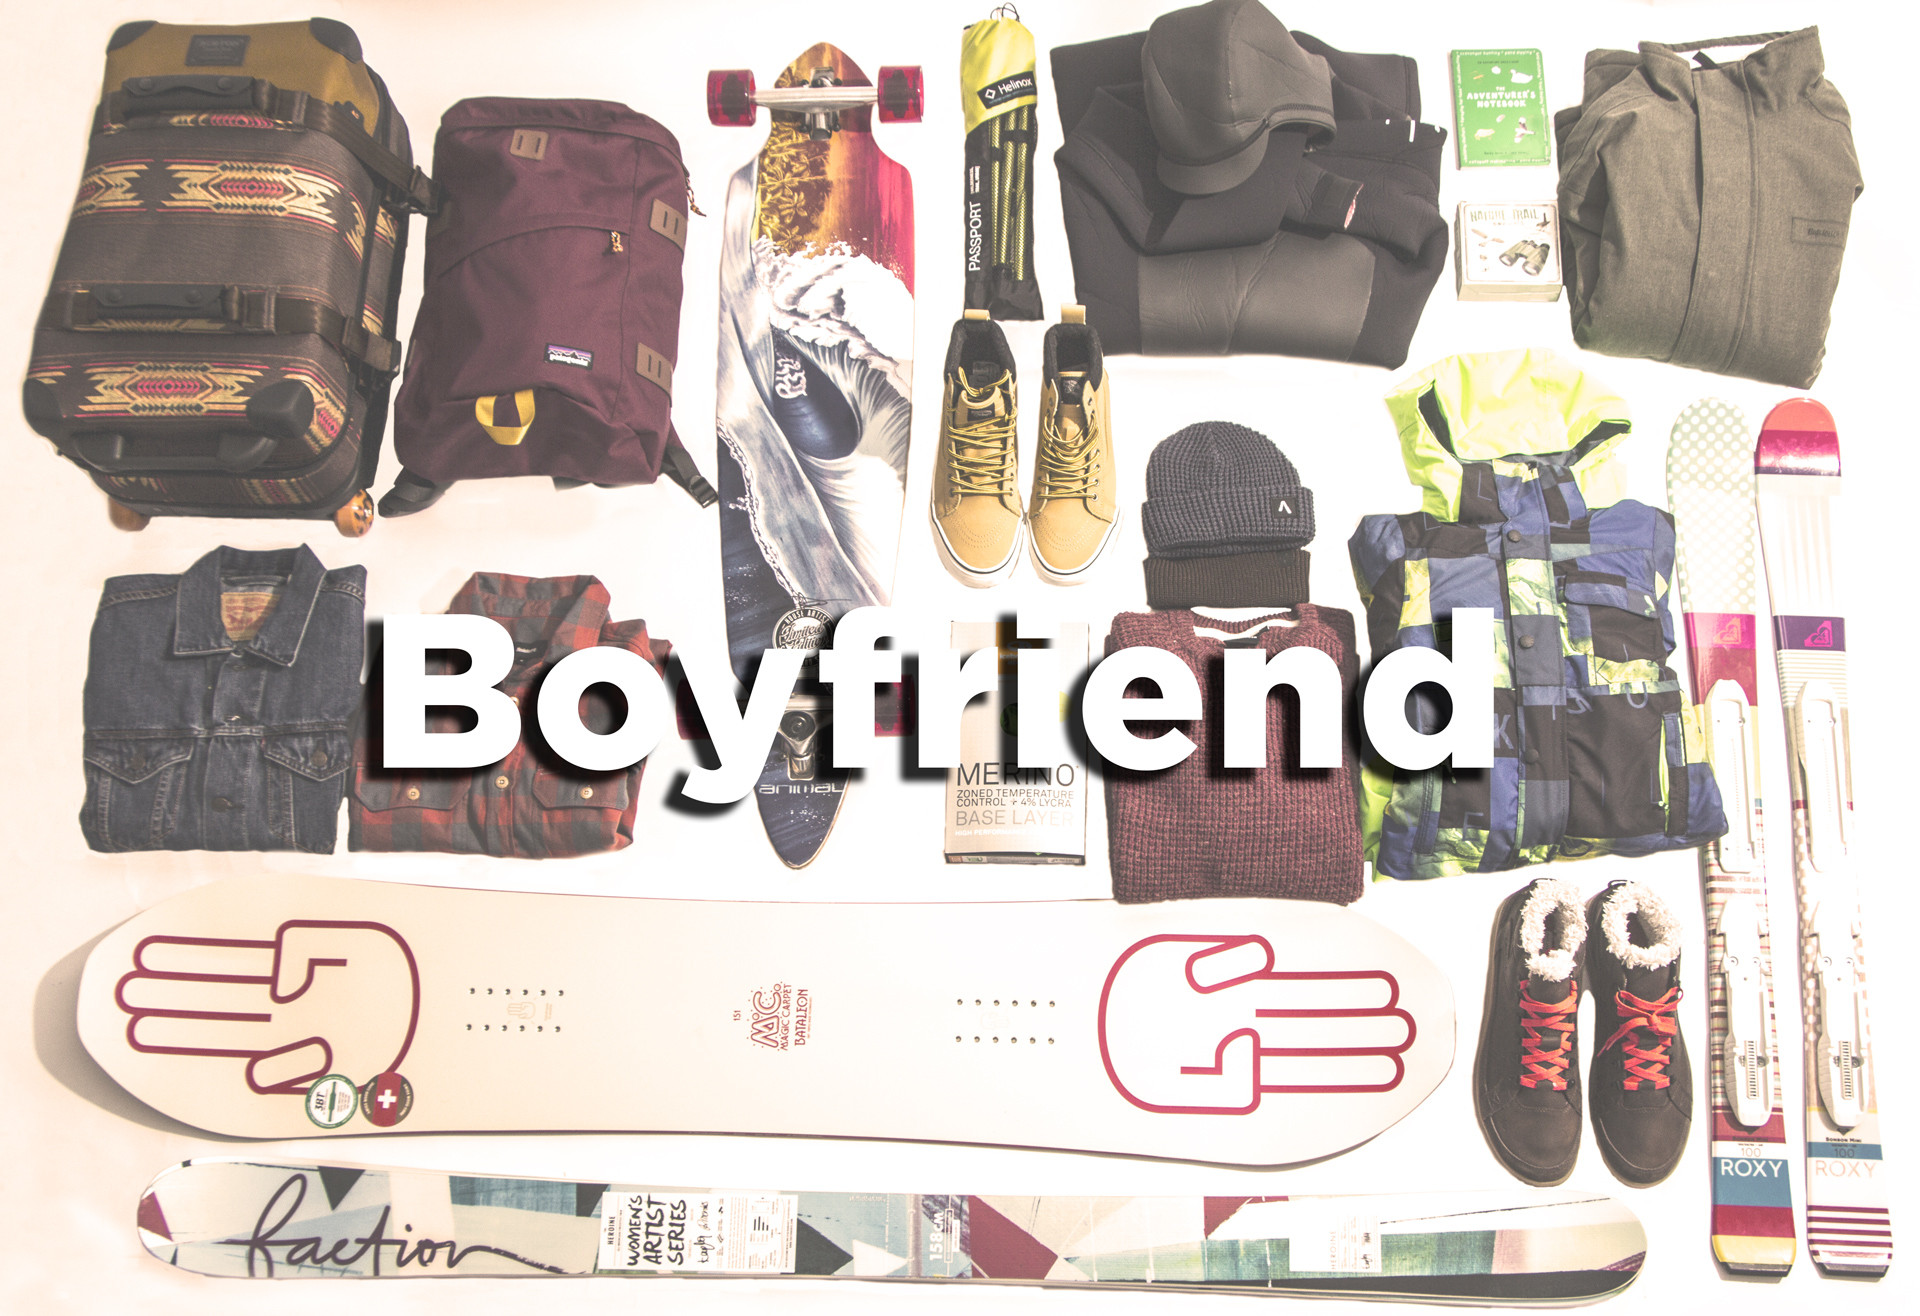 Gift Ideas For Boyfriend
 Christmas Gift Ideas For A Boyfriend 15 Great Gifts